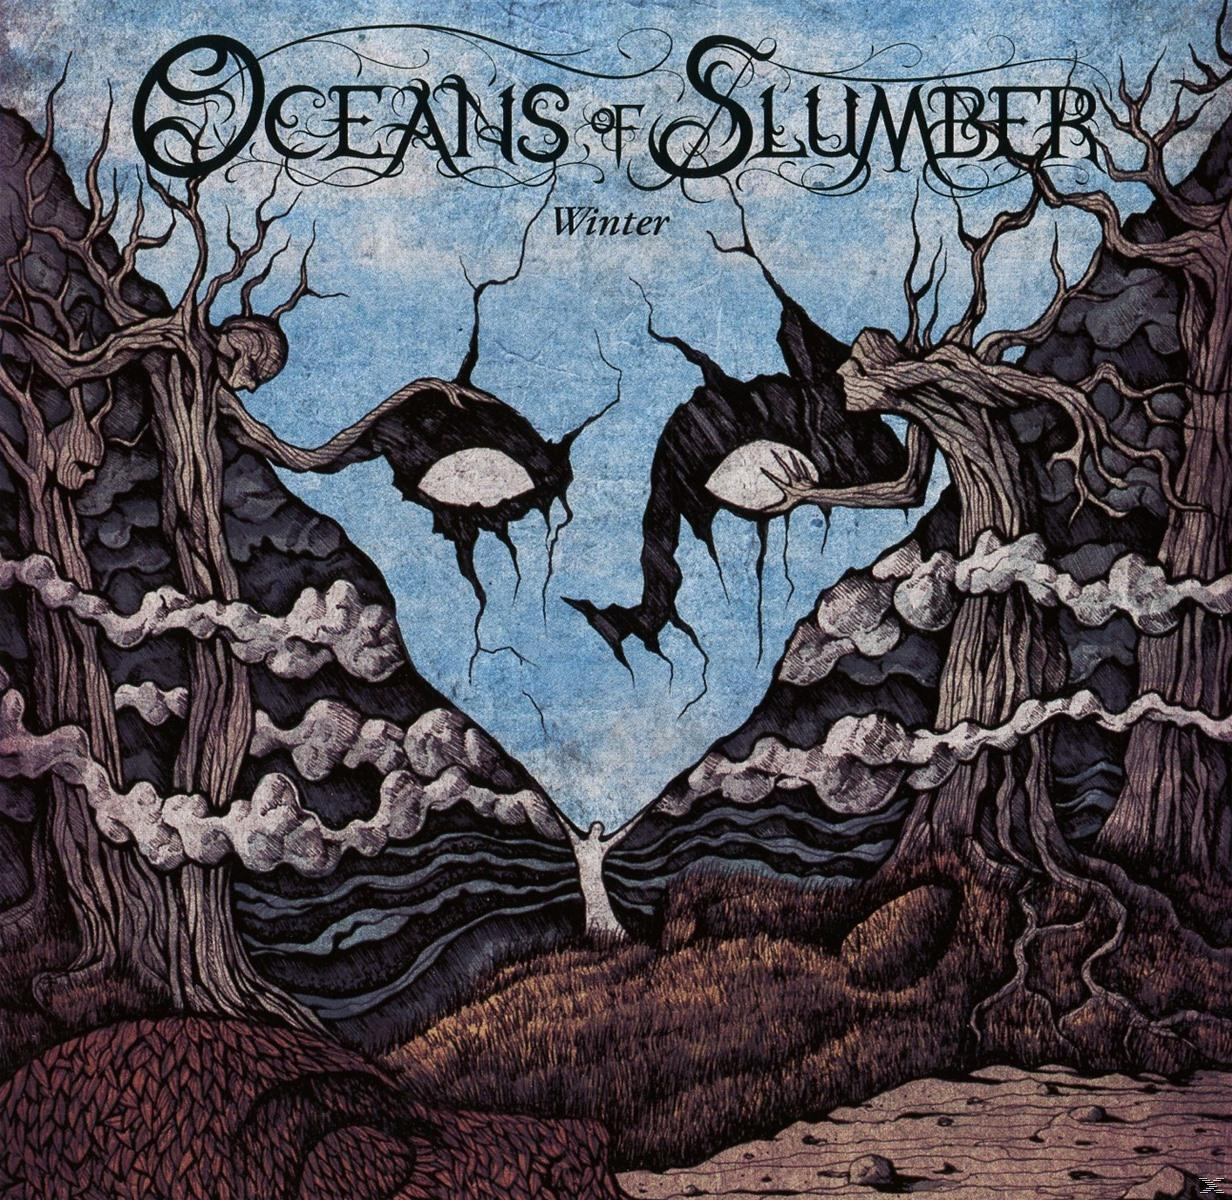 Oceans Of Slumber (CD) - Winter 